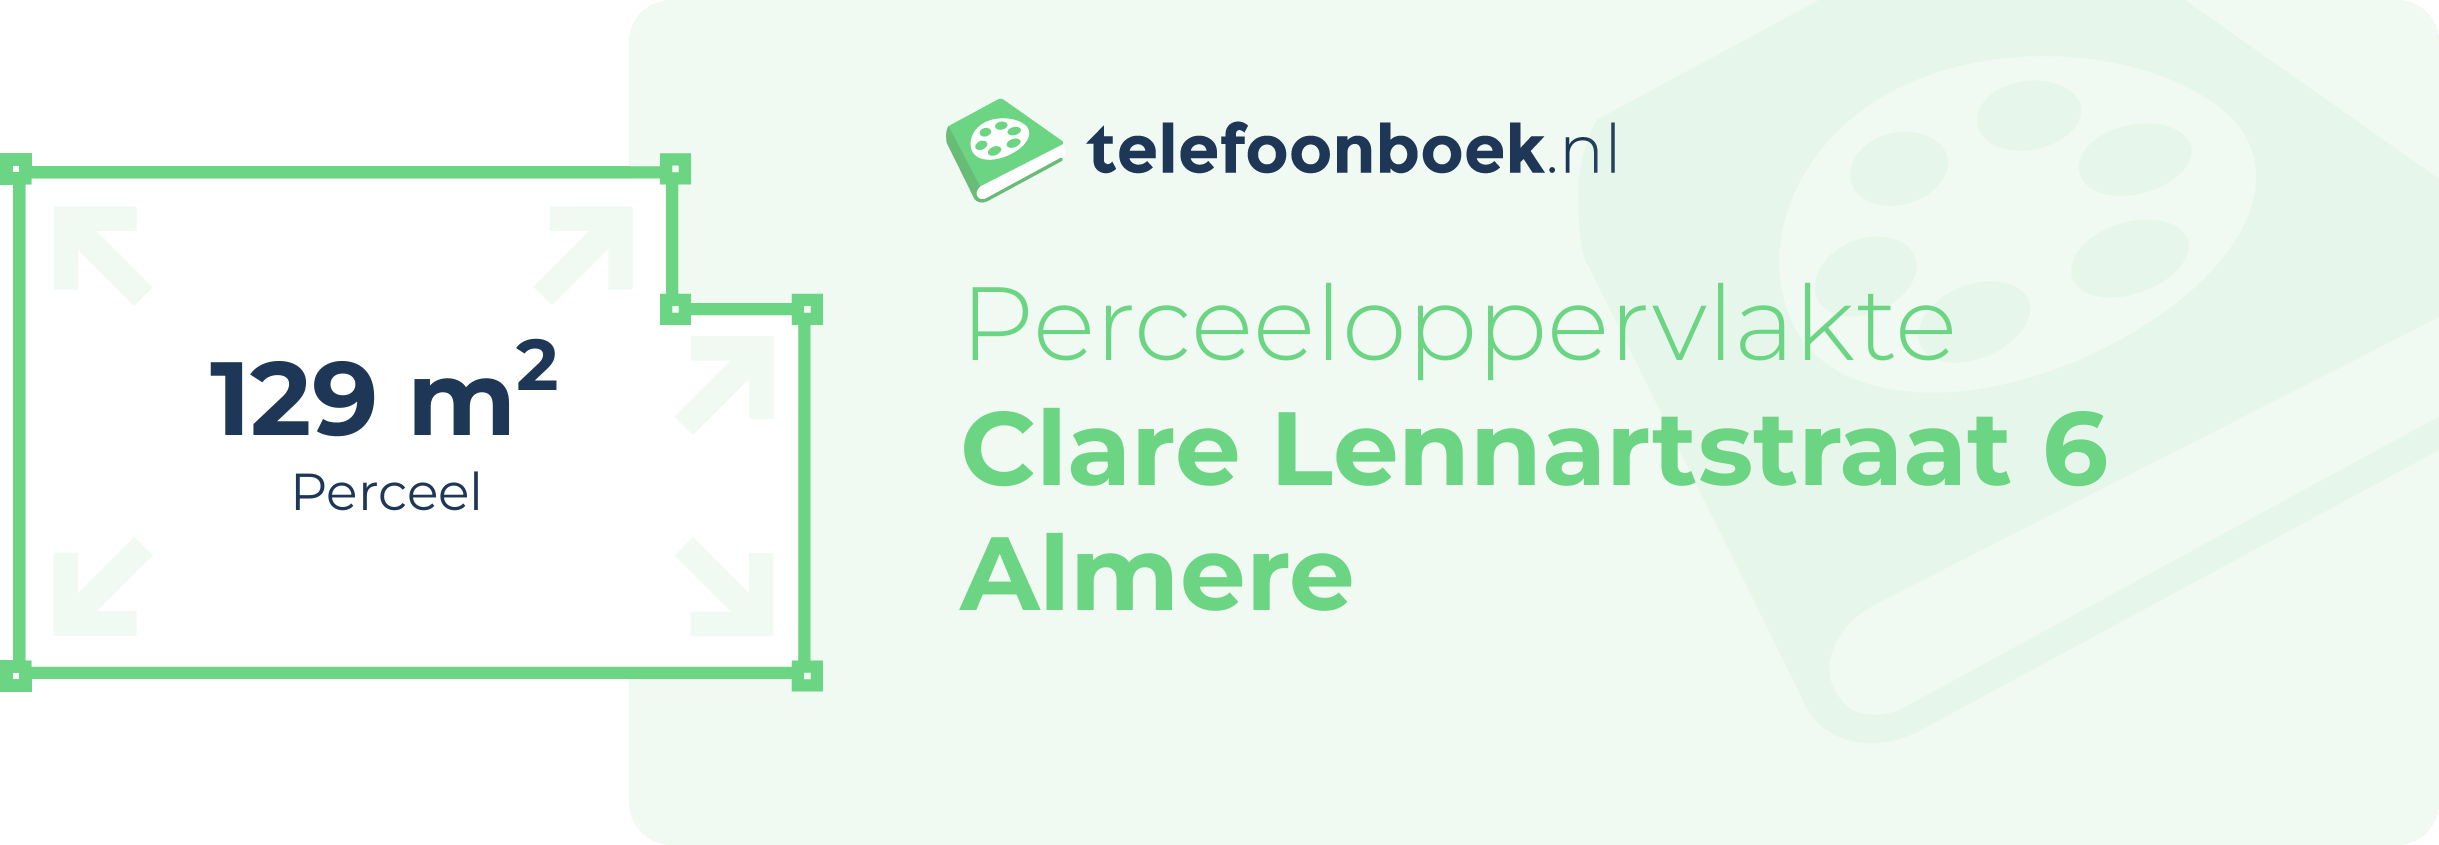 Perceeloppervlakte Clare Lennartstraat 6 Almere